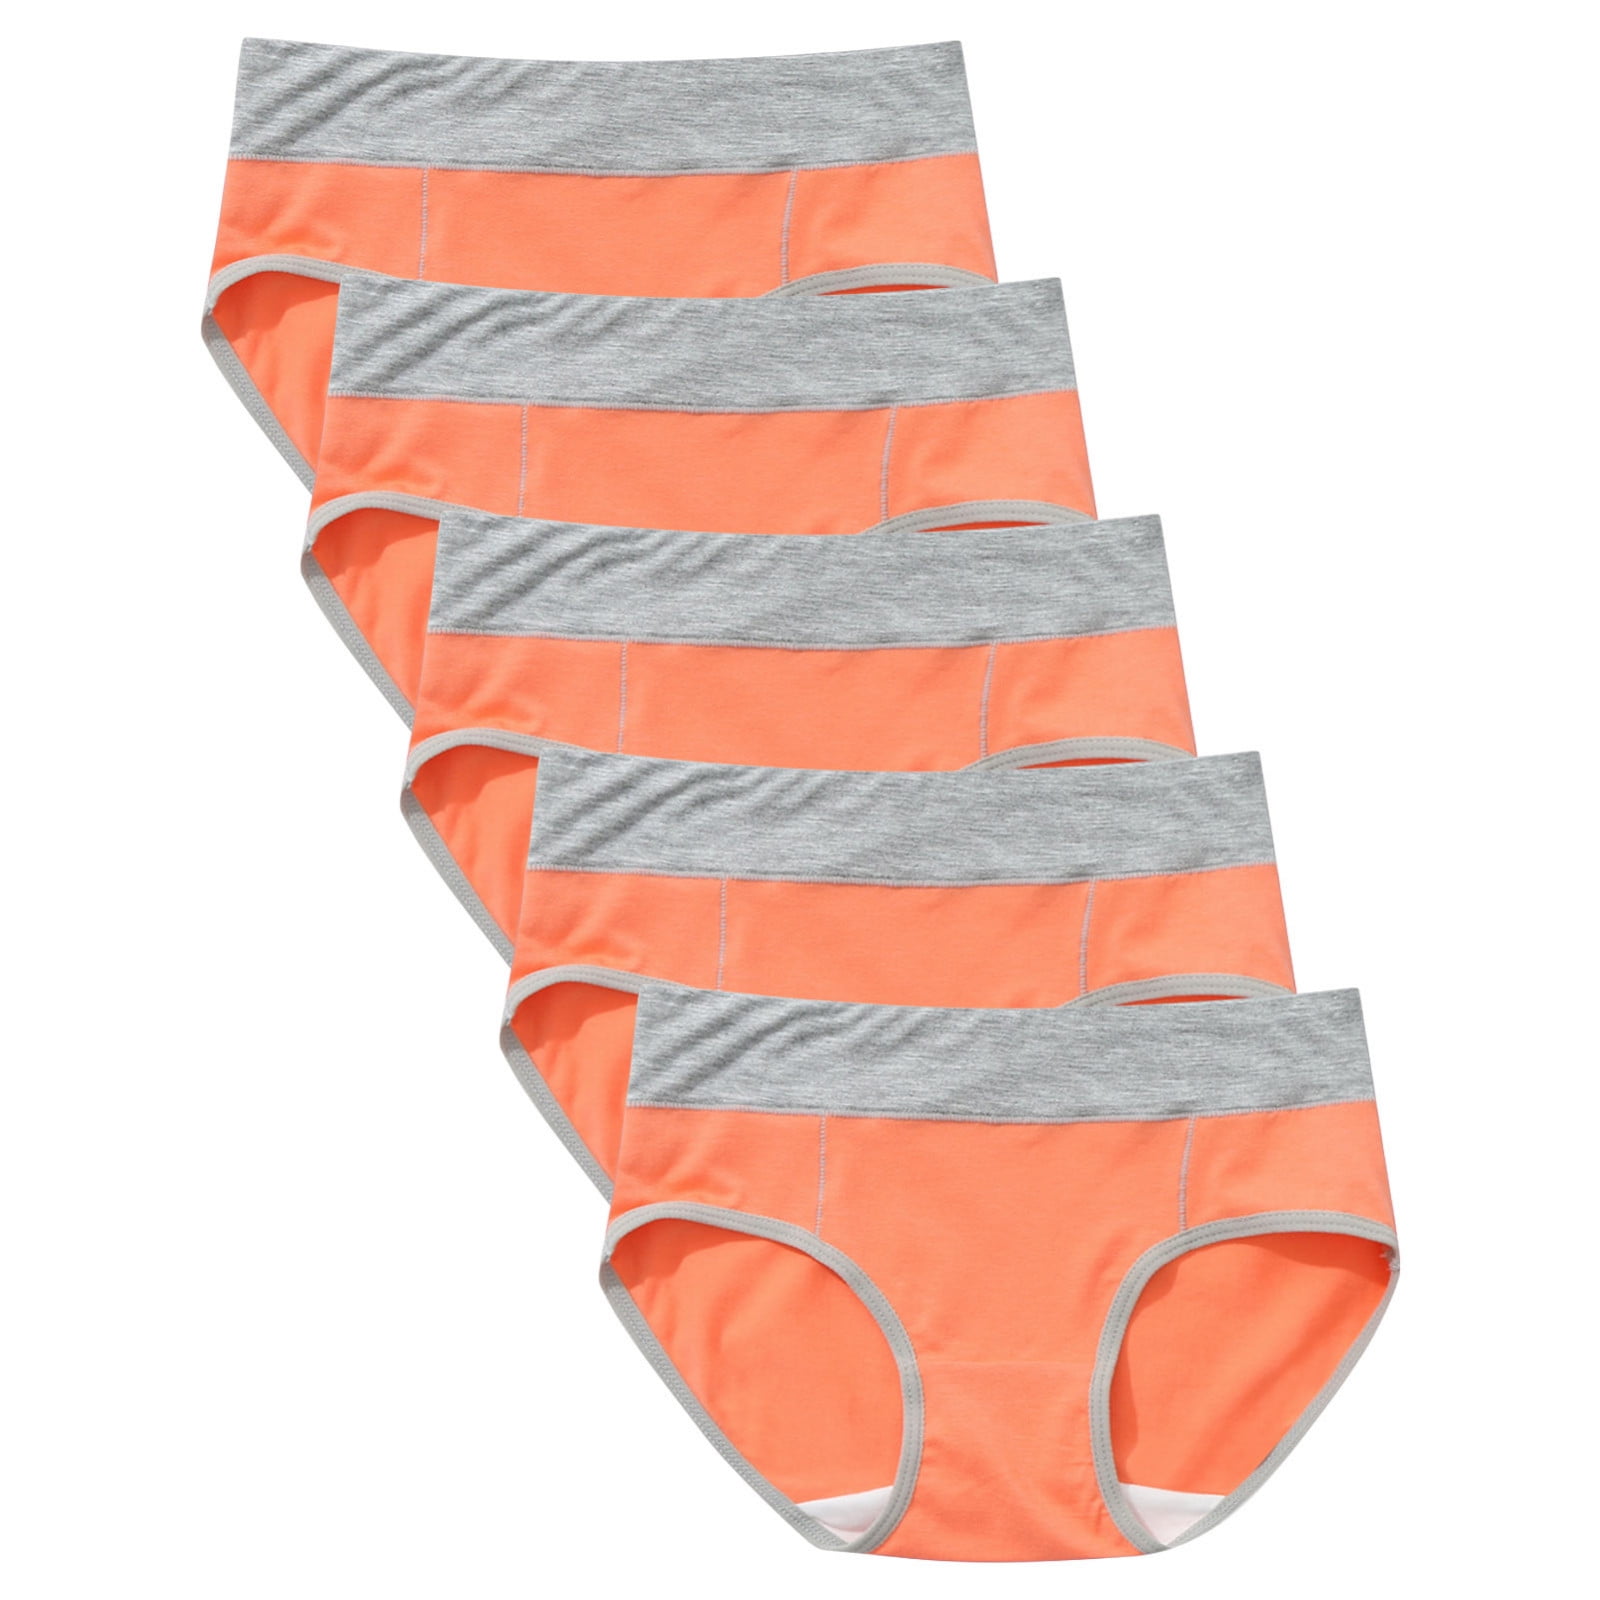 Mrat Seamless Underwear Women Pack Lingerie Breathable Panty